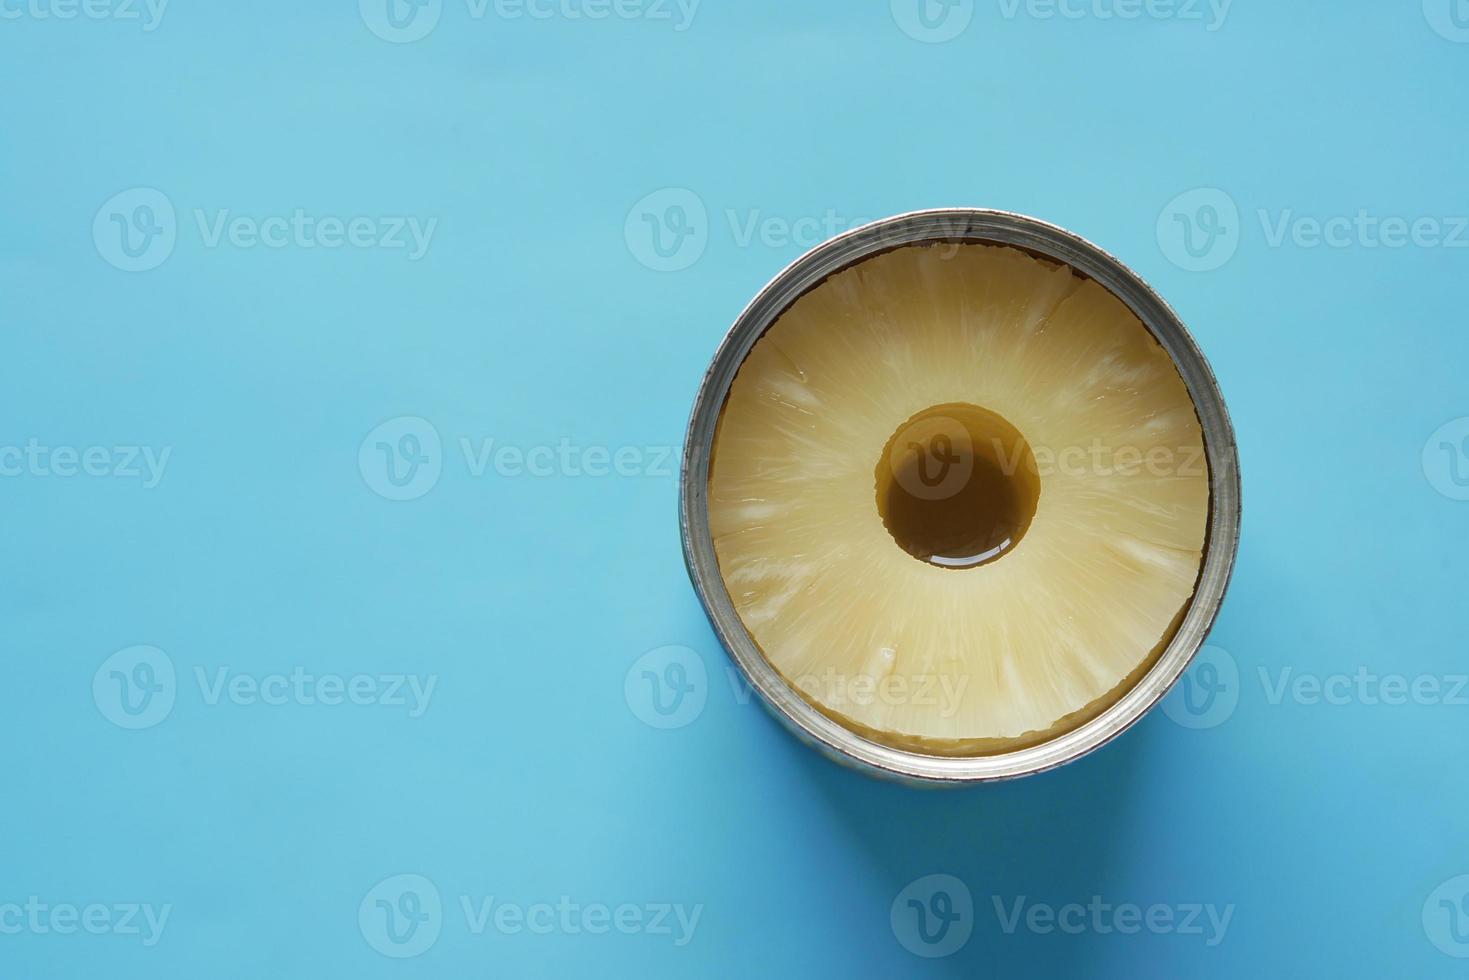 en öppen burk ananas på bordet med kopia utrymme foto